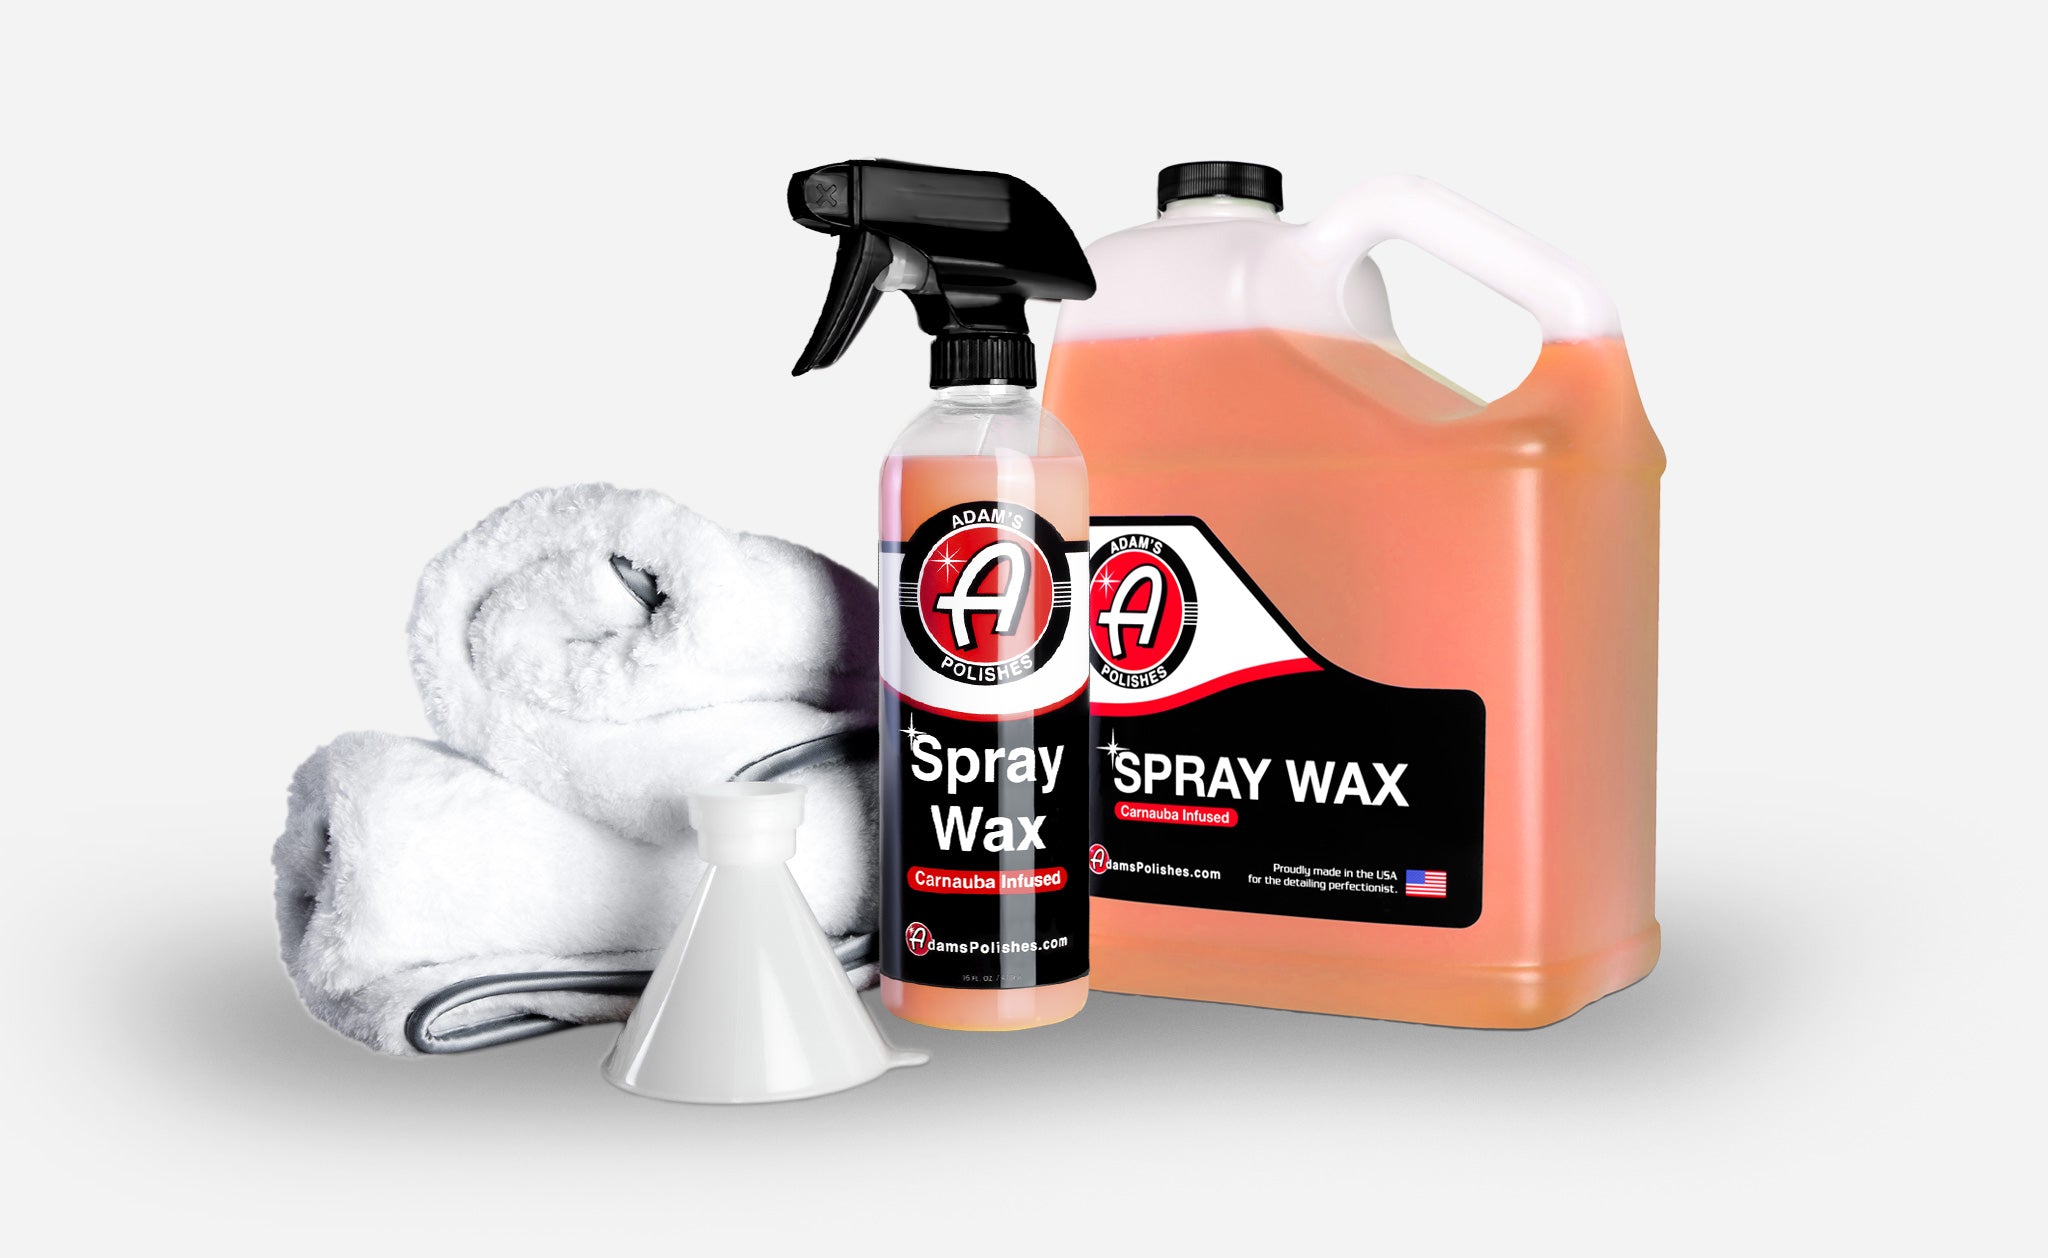 Adam's Spray Wax Gallon With Free 16oz